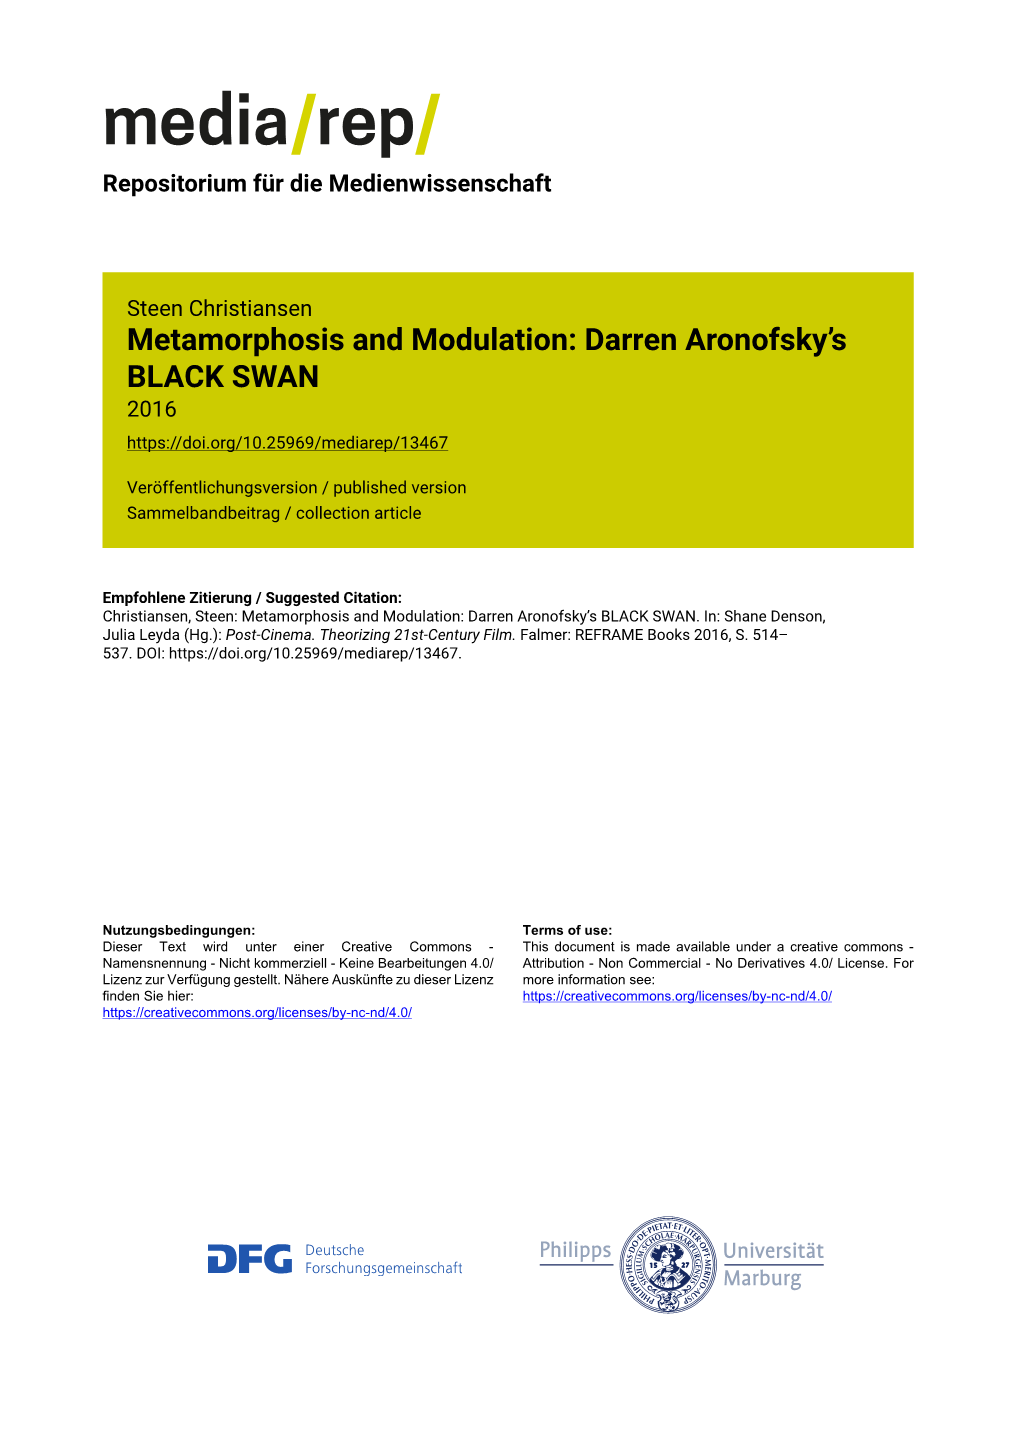 Metamorphosis and Modulation: Darren Aronofsky's BLACK SWAN